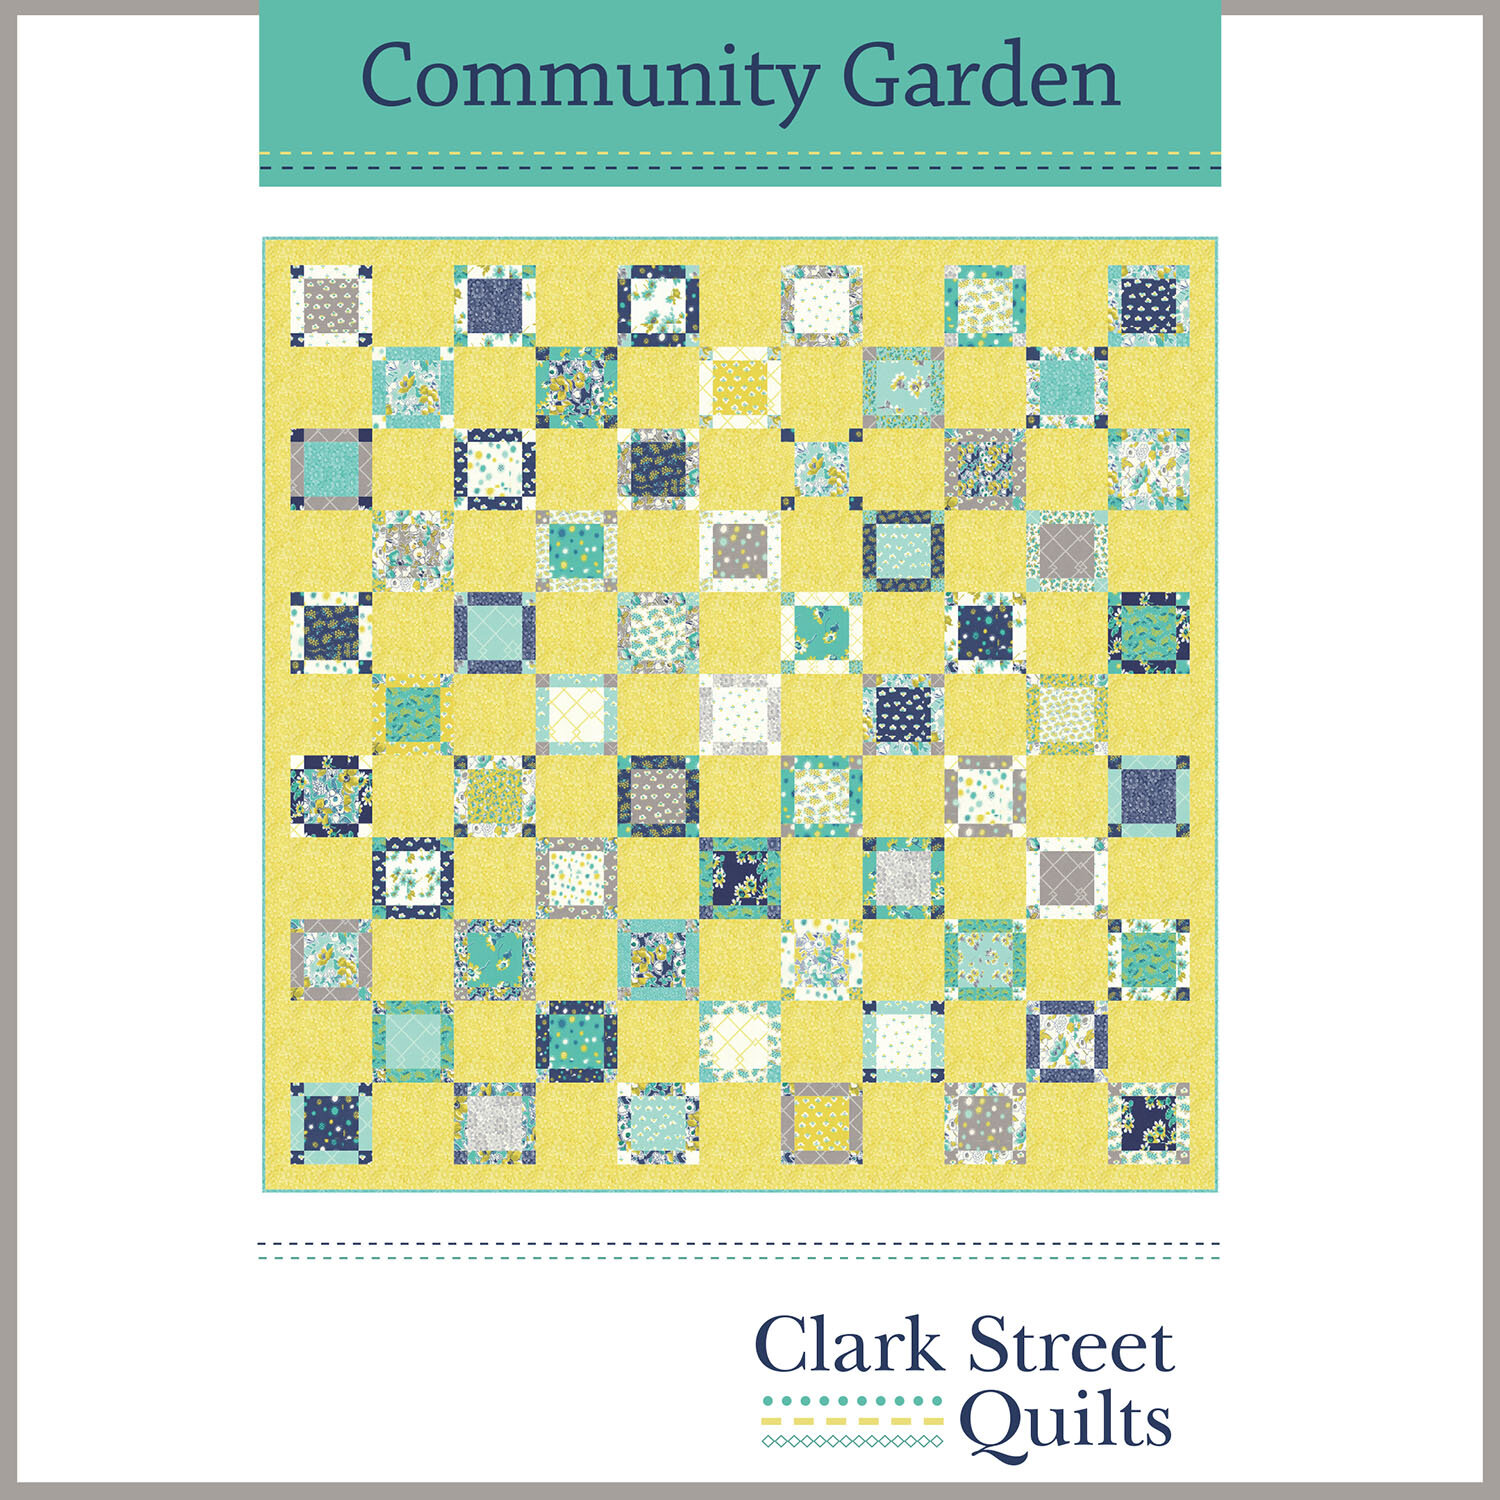 Community garden_fabricdesignpage.jpg